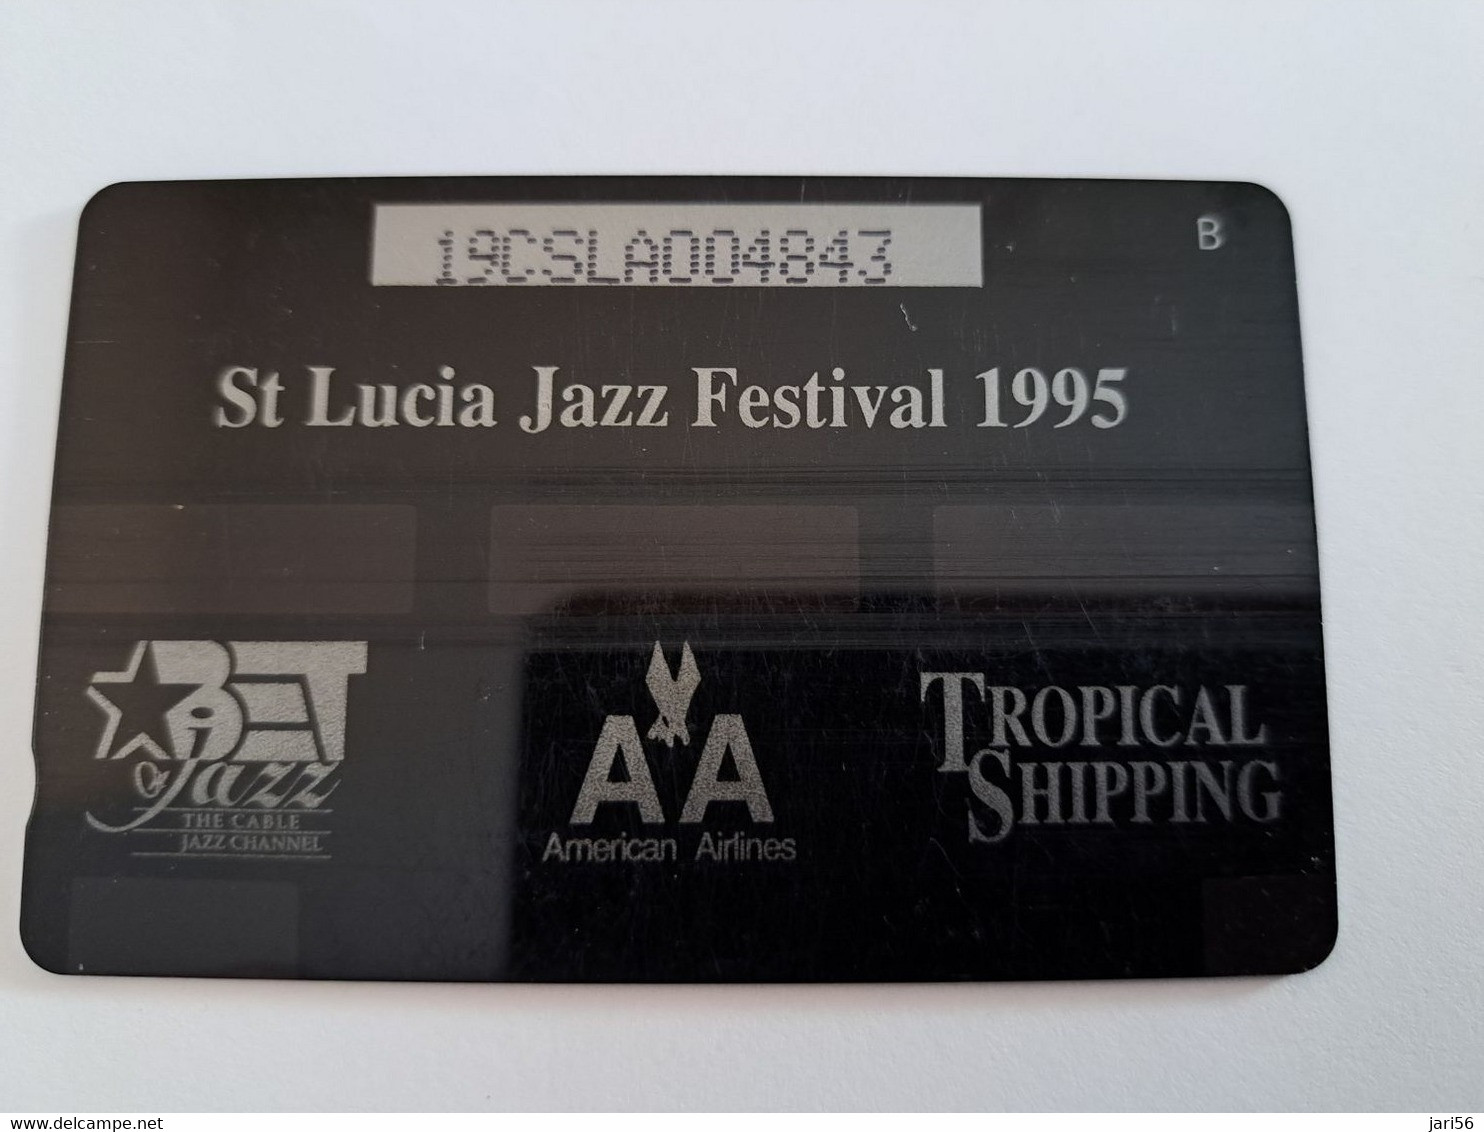 ST LUCIA    $ 20   CABLE & WIRELESS  STL-19A  19CSLA      JAZZ FESTIVAL 1995  Fine Used Card ** 10880** - Sainte Lucie